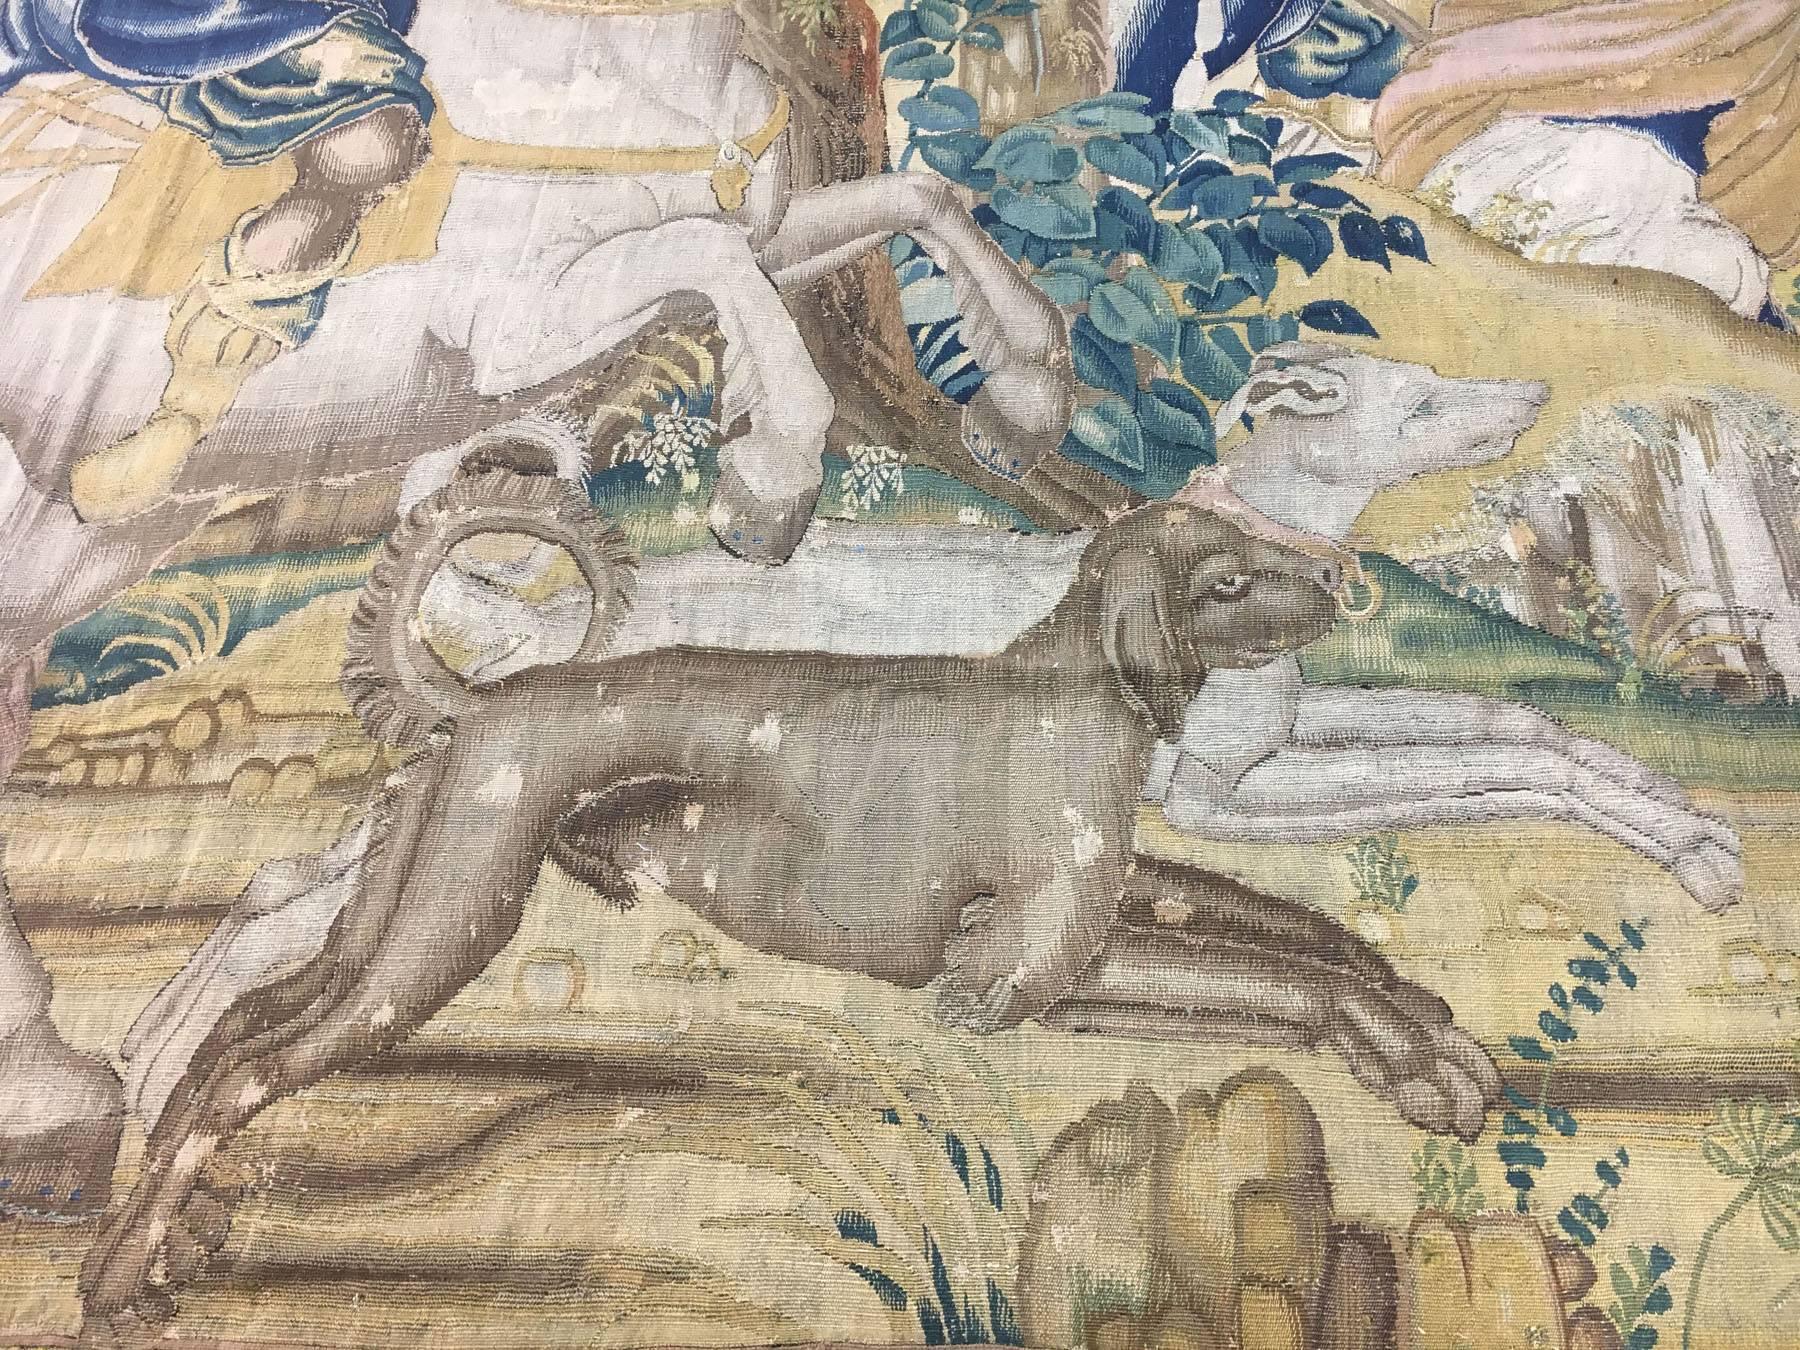 Late 16th Century Audenarde Mythological Tapestry 21'6 x 11'4 For Sale 2